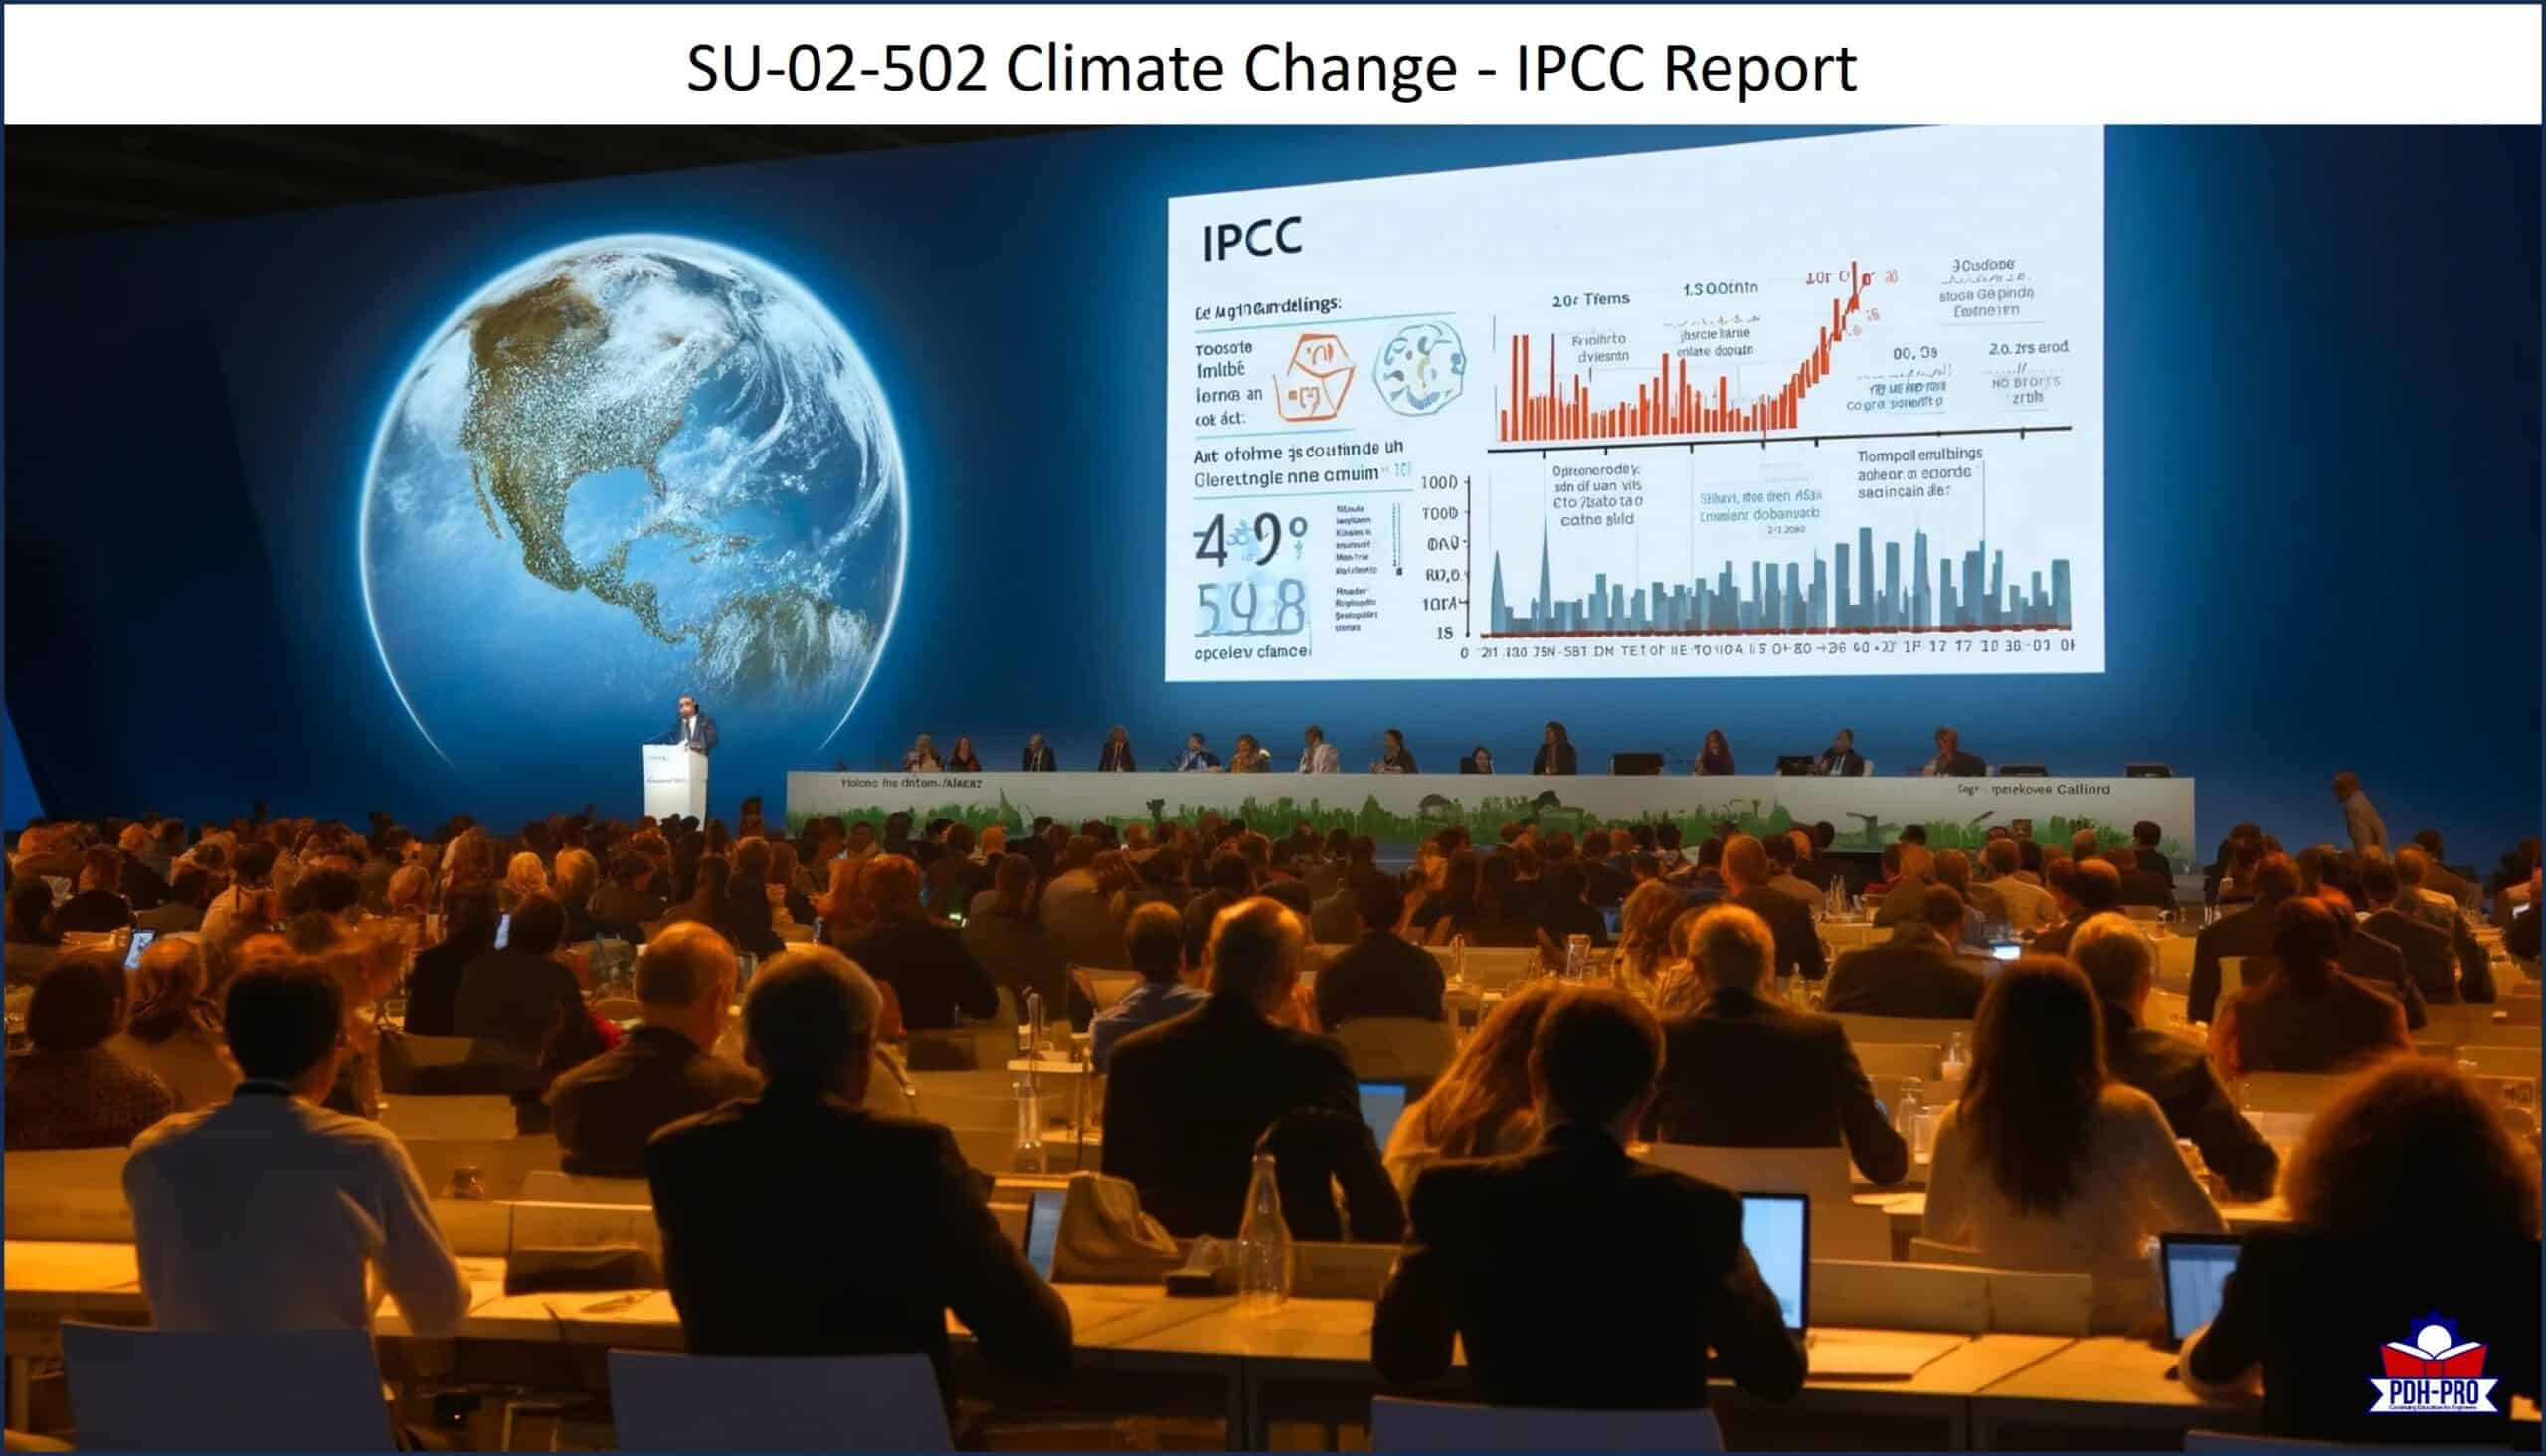 Climate Change - IPCC 2014 Report